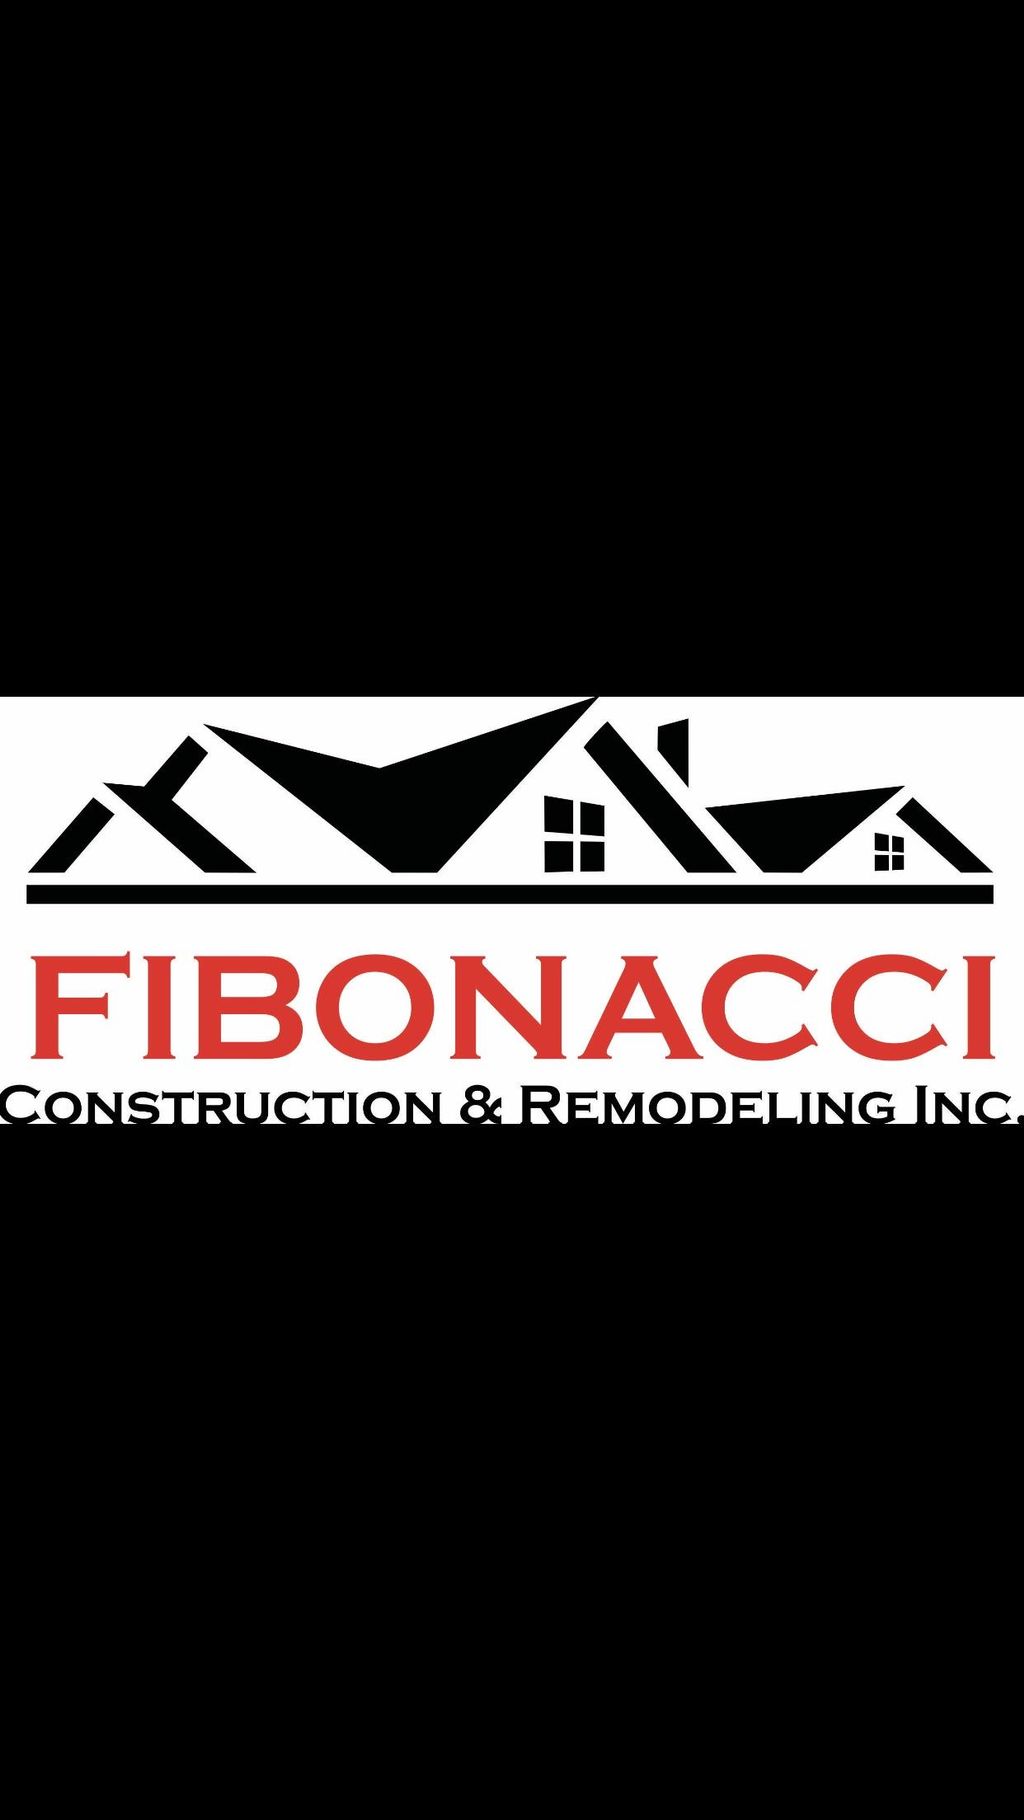 Fibonacci Construction & Remodeling Inc.